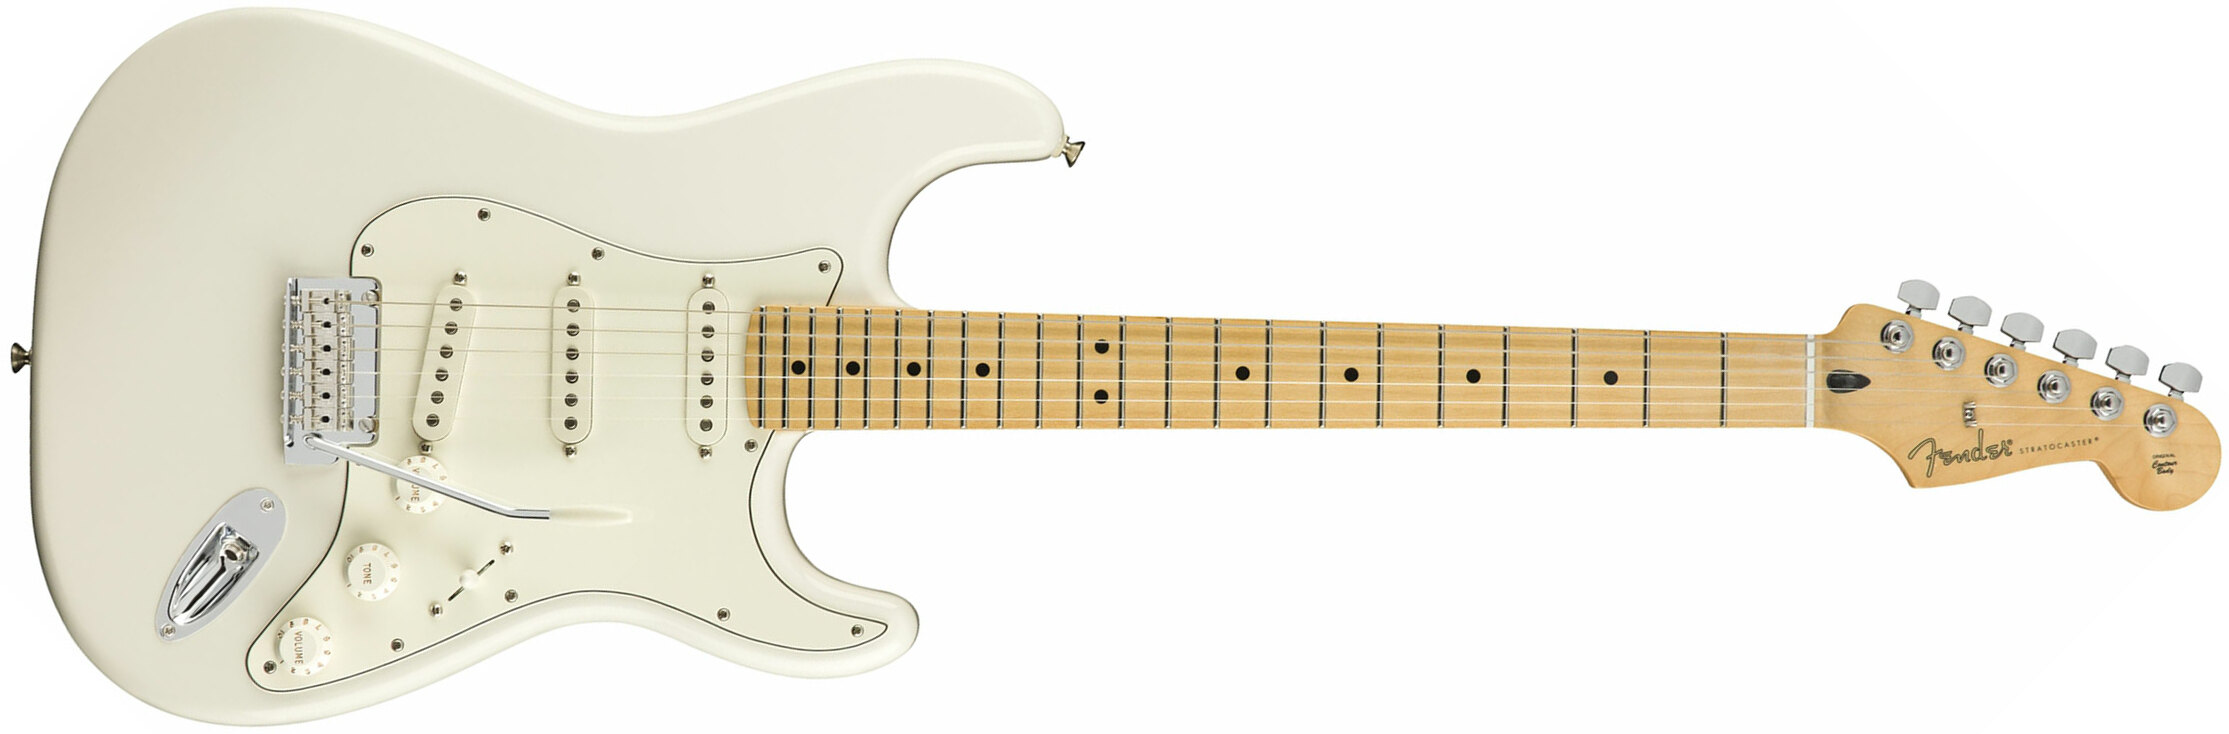 Fender Strat Player Mex Sss Mn - Polar White - Guitarra eléctrica con forma de str. - Main picture